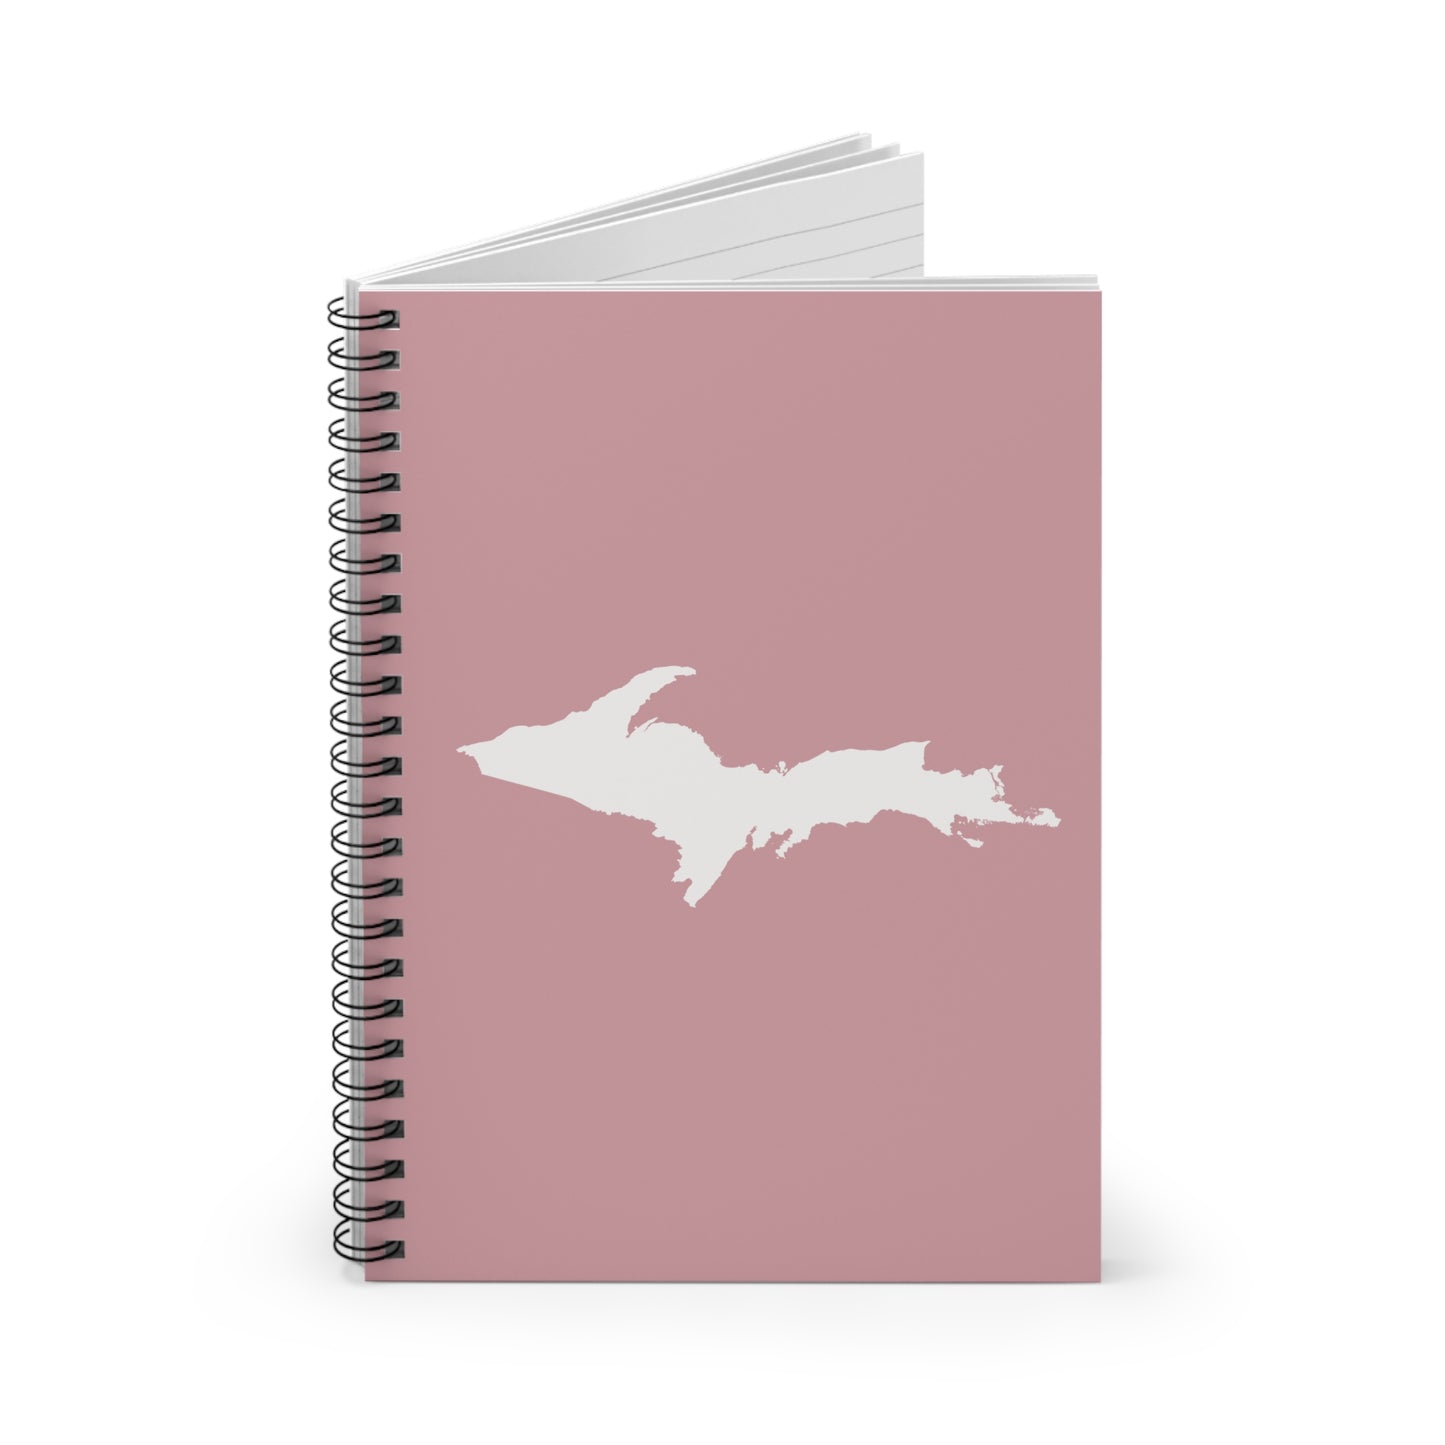 Michigan Upper Peninsula Spiral Notebook (w/ UP Outline) | Cherry Blossom Pink